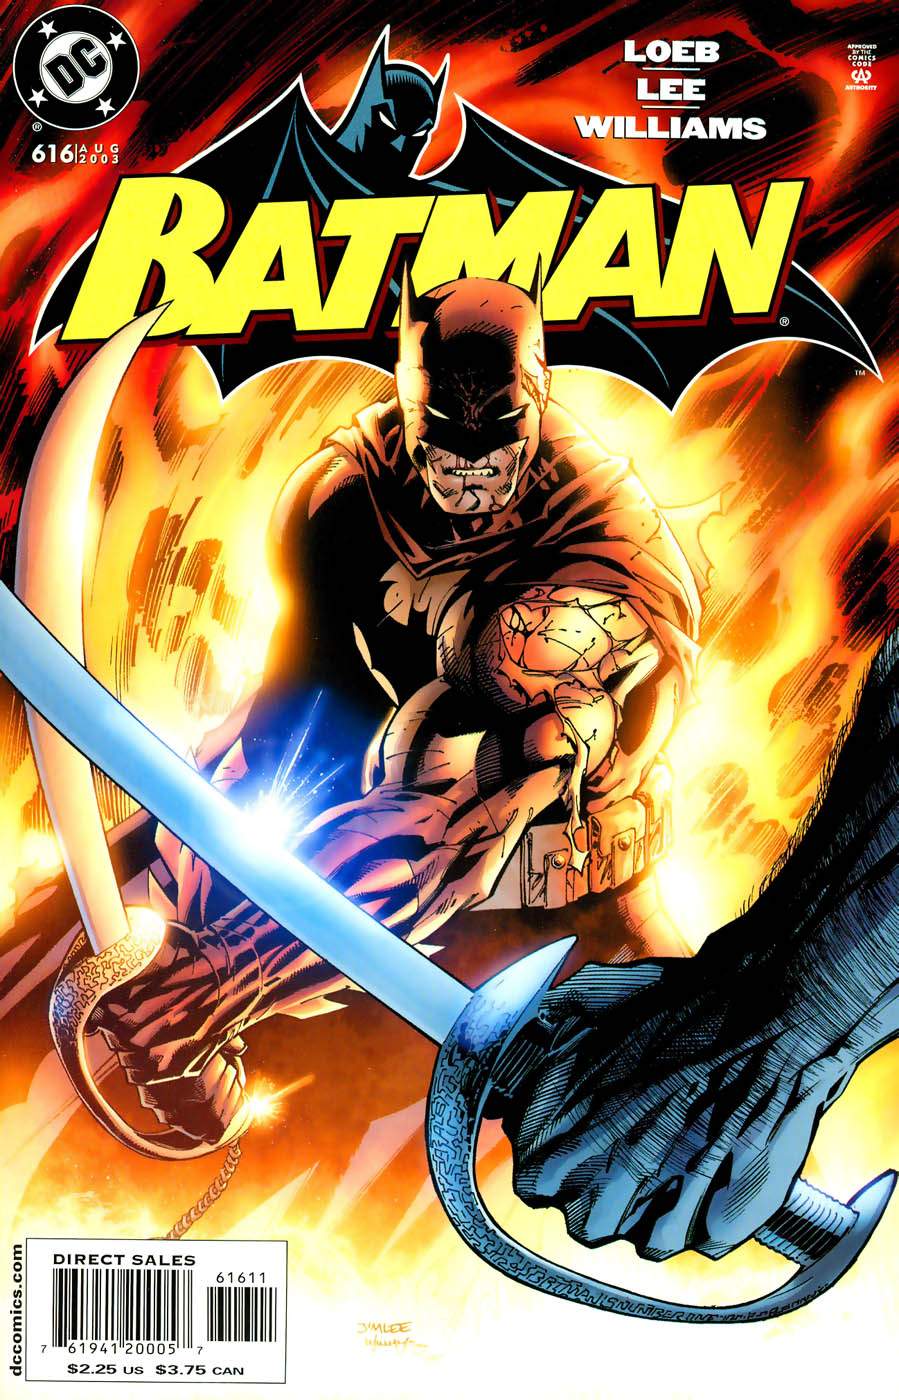 Batman Hush Issue 9 | Read Batman Hush Issue 9 comic online in high  quality. Read Full Comic online for free - Read comics online in high  quality .| READ COMIC ONLINE